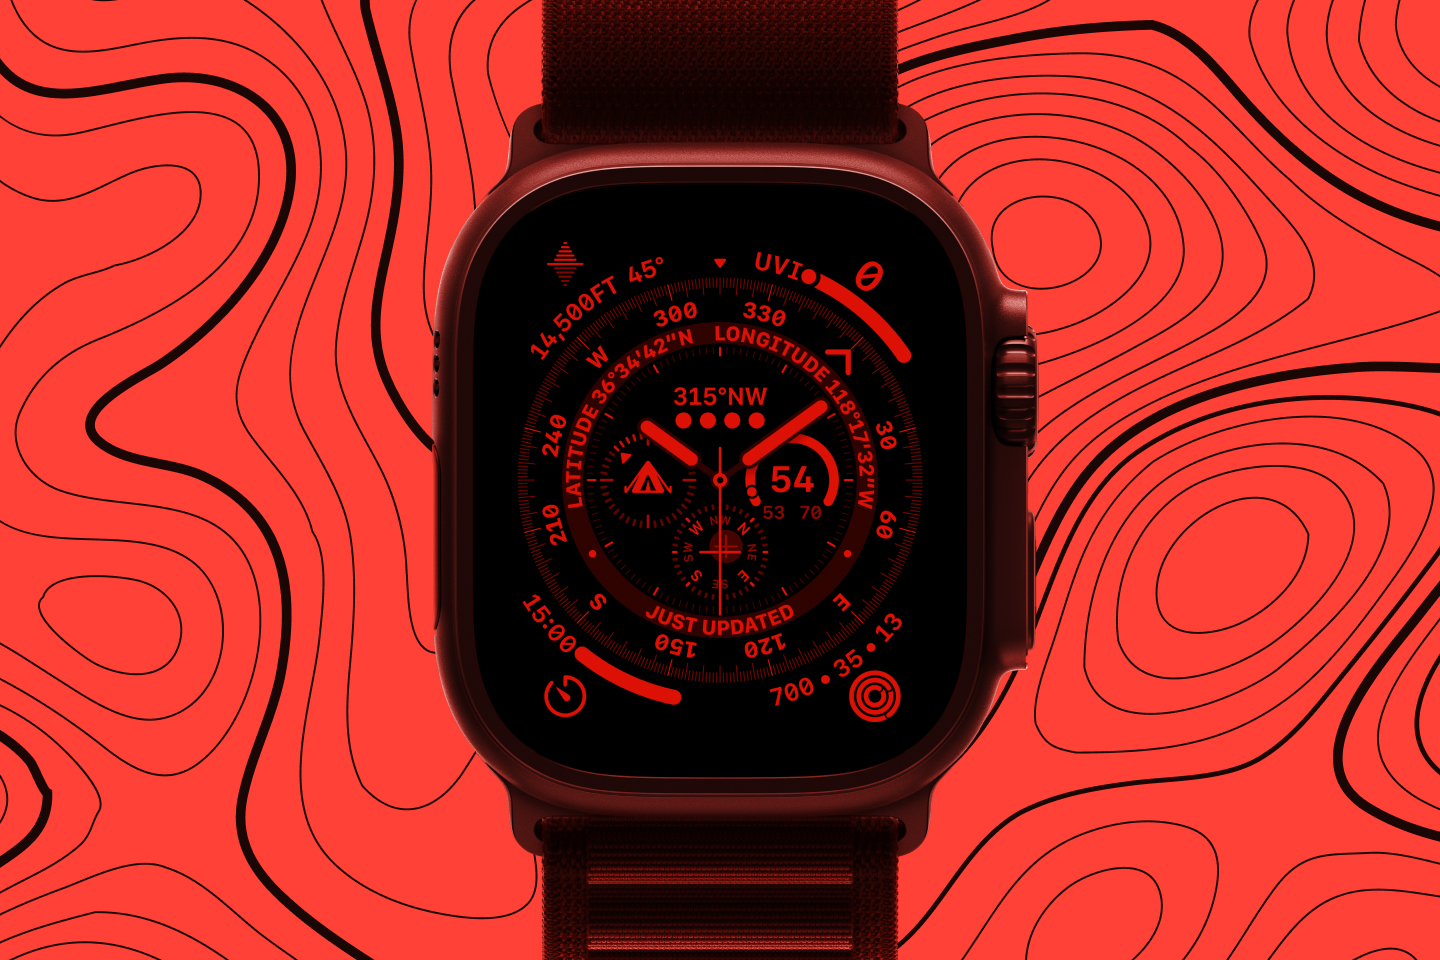 Apple Watch Ultra succeeds where Watch Edition failed